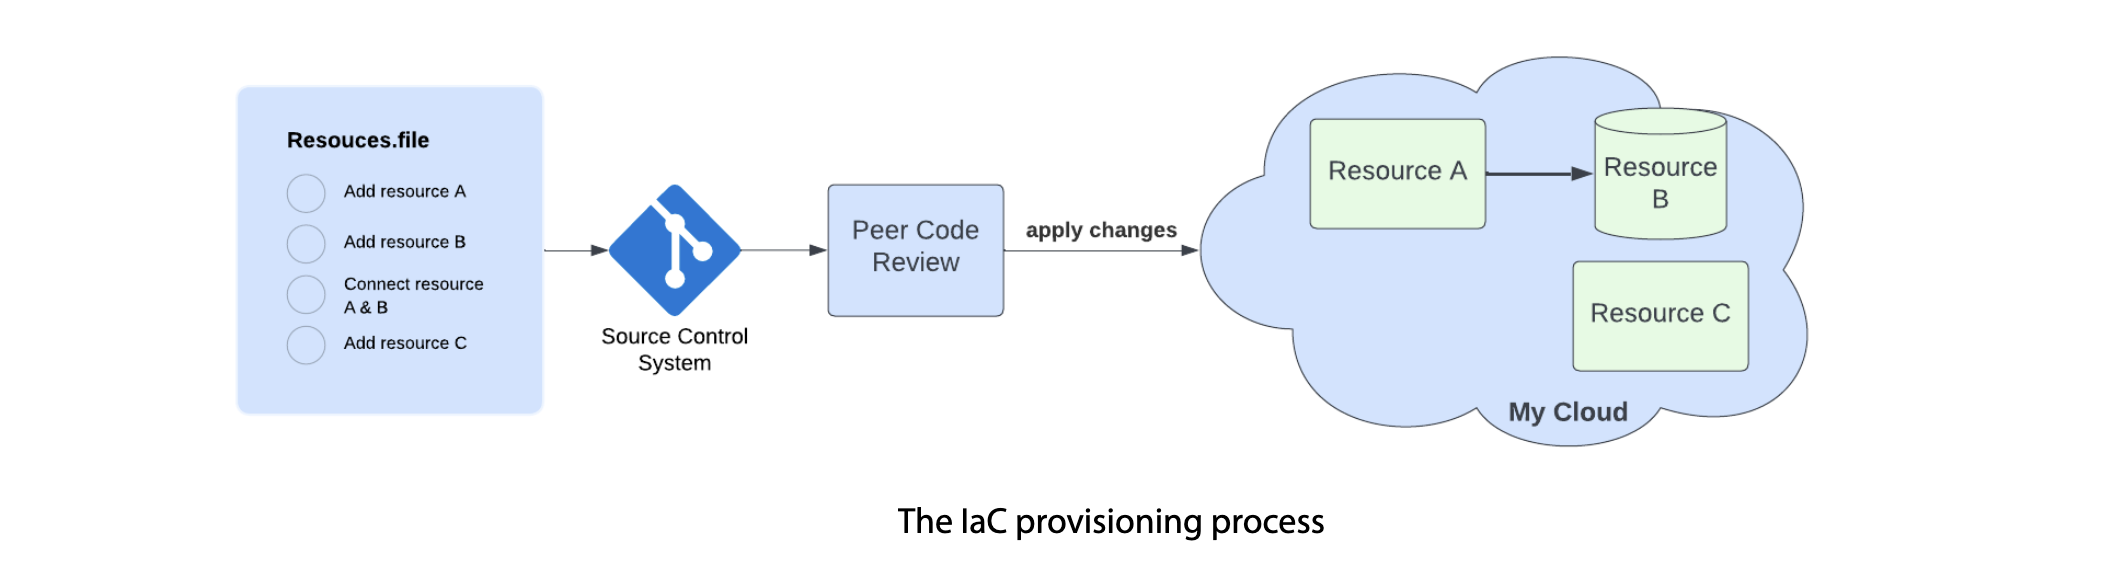 IaC-provisioning.png